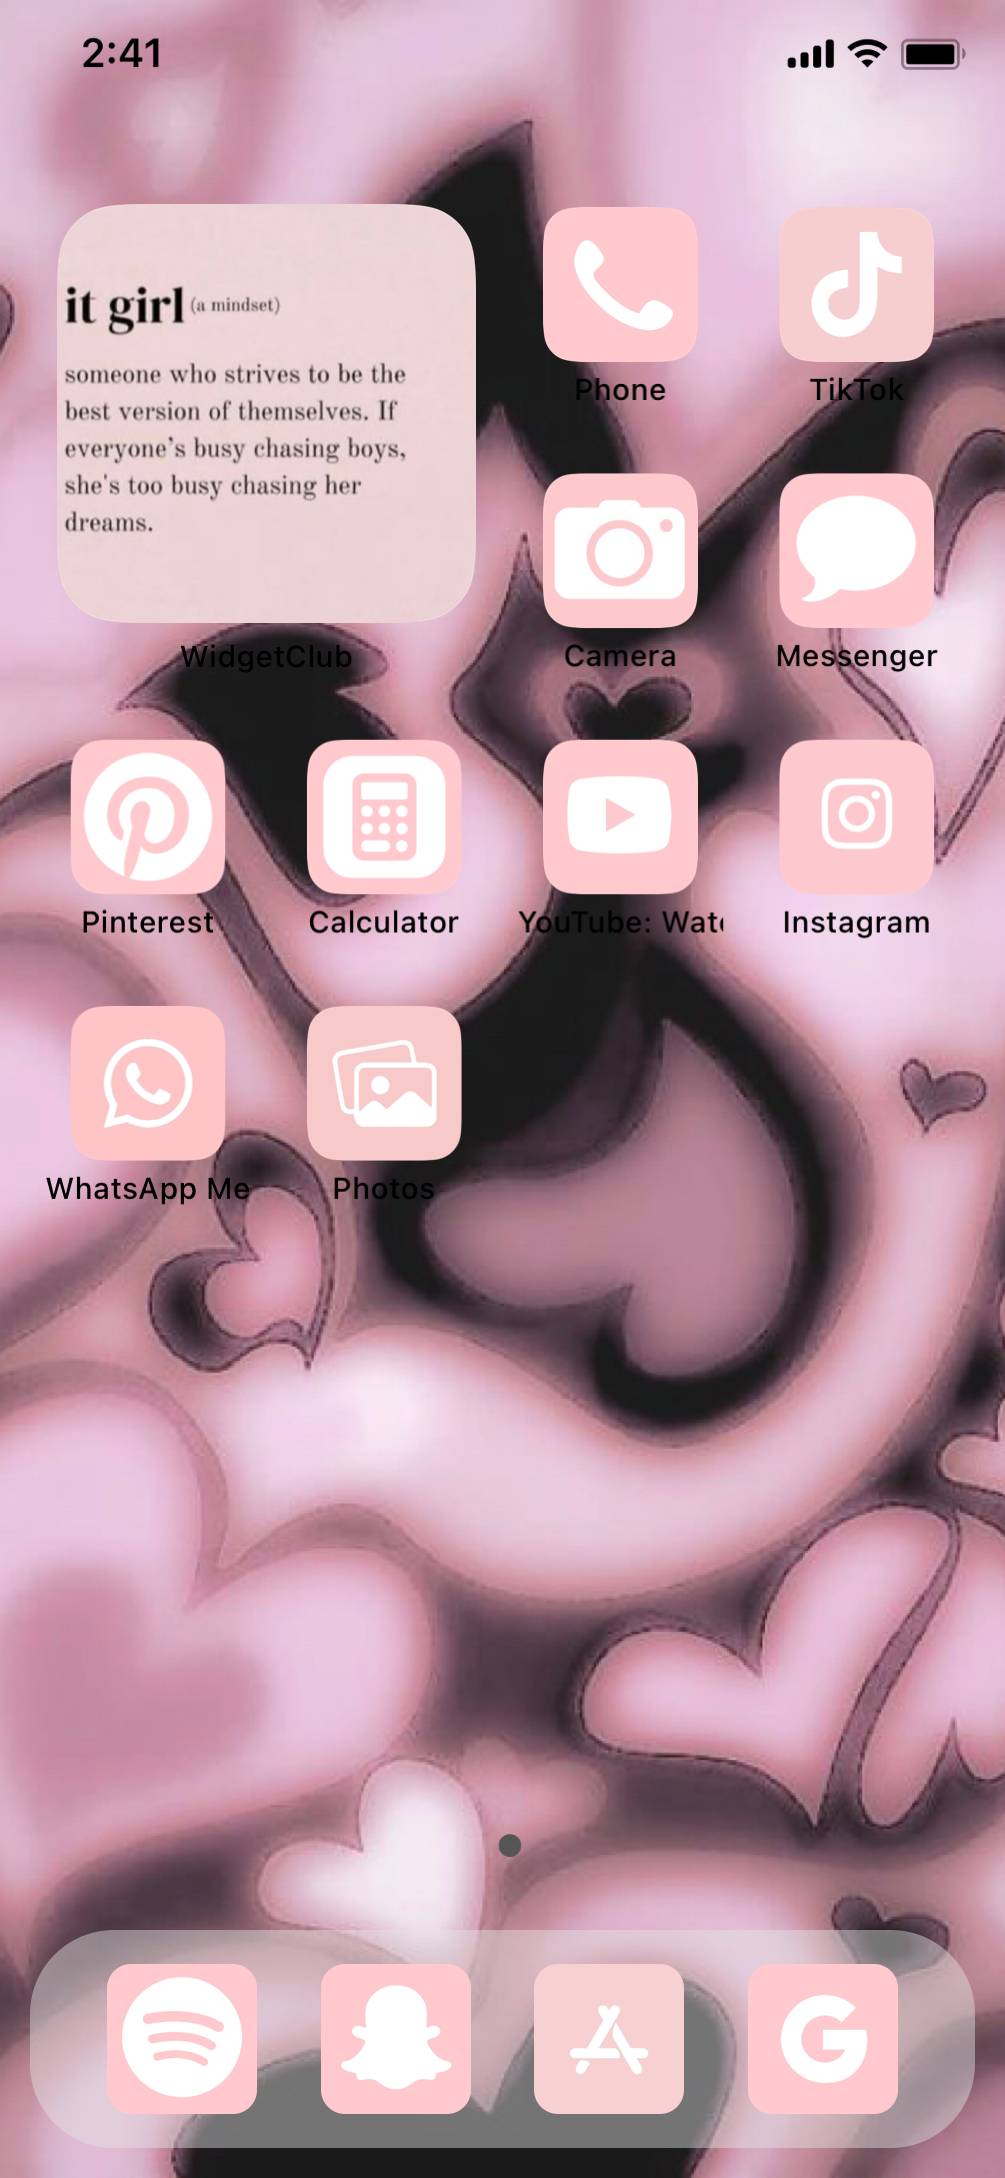 pink themeИдеје за почетни екран[1PxRhOMt6eczepzA80vV]